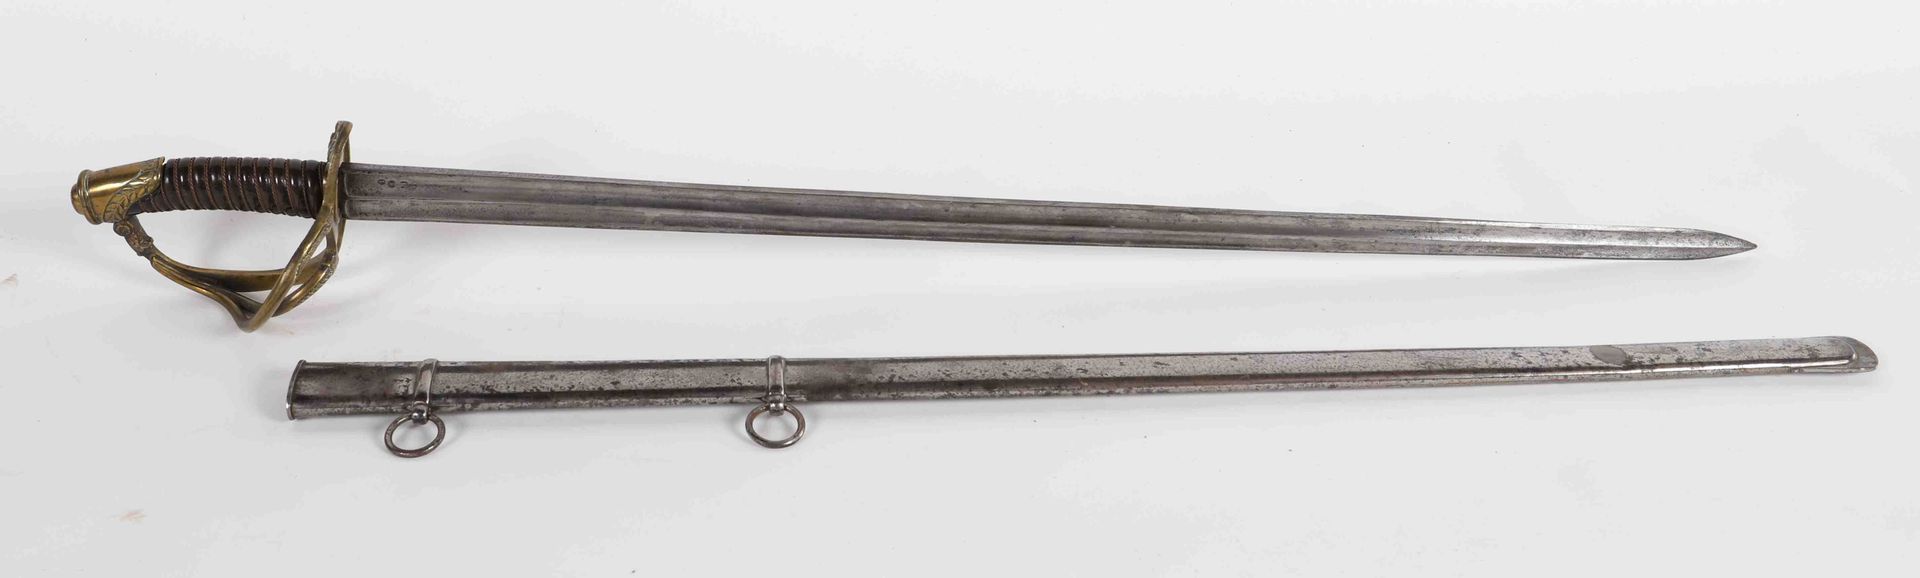 Null 克林根塔尔（Klingenthal）制造的贵族直筒军刀。

两面刃，皮轴，铜丝三点防护。在刀刃上打了两拳。带环的金属刀鞘。

1812年11月

法国